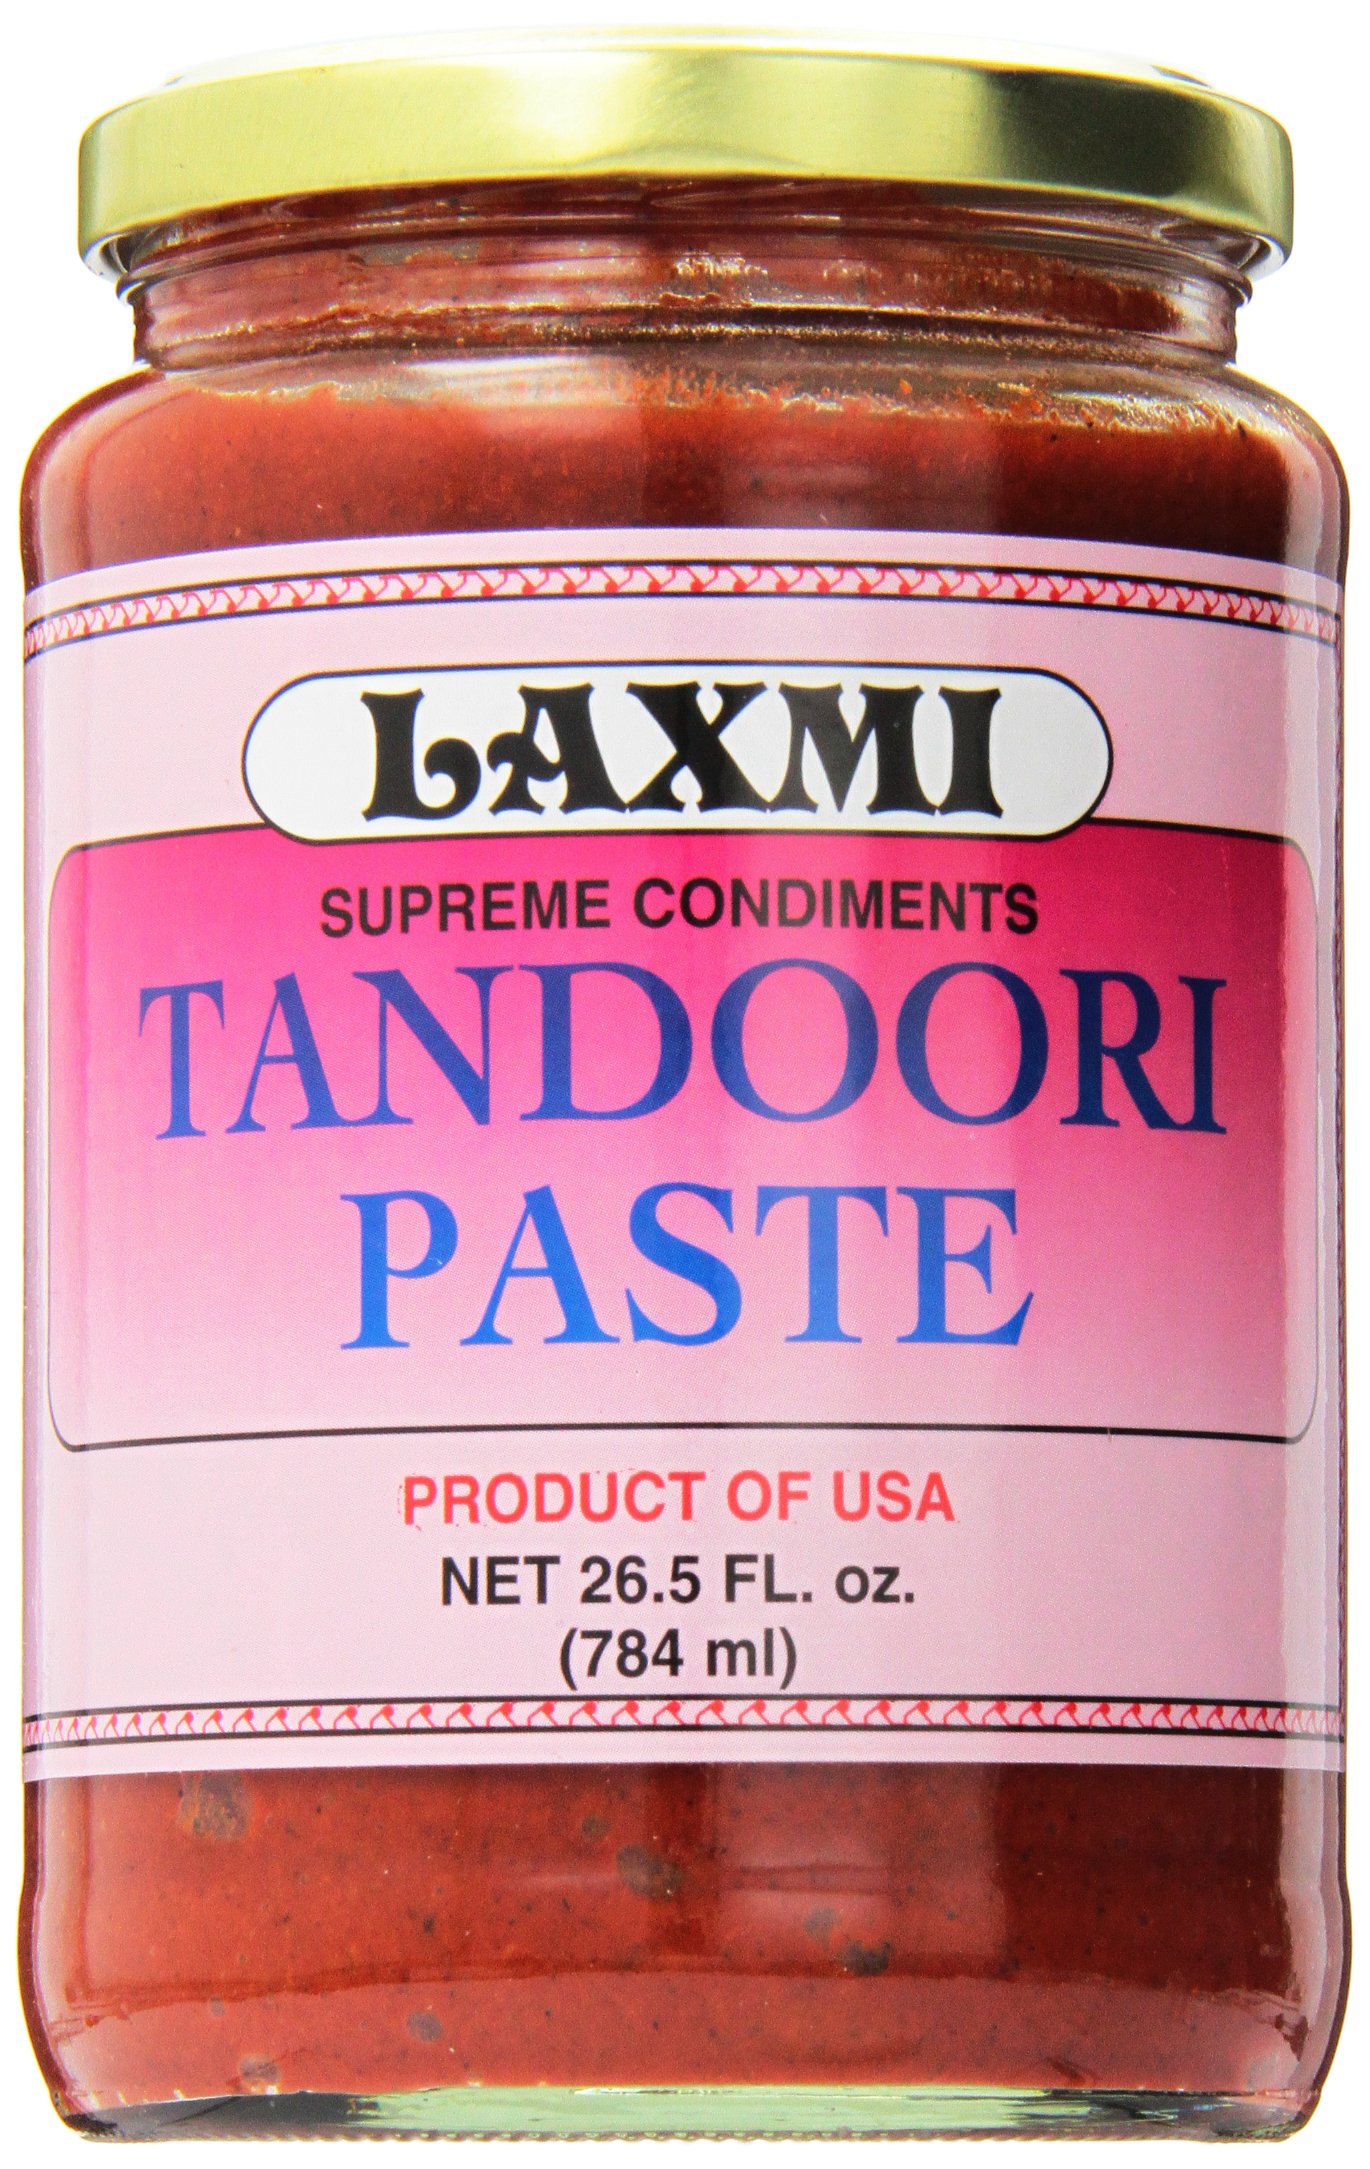 Laxmi Tandoori Paste 24 Oz | eBay